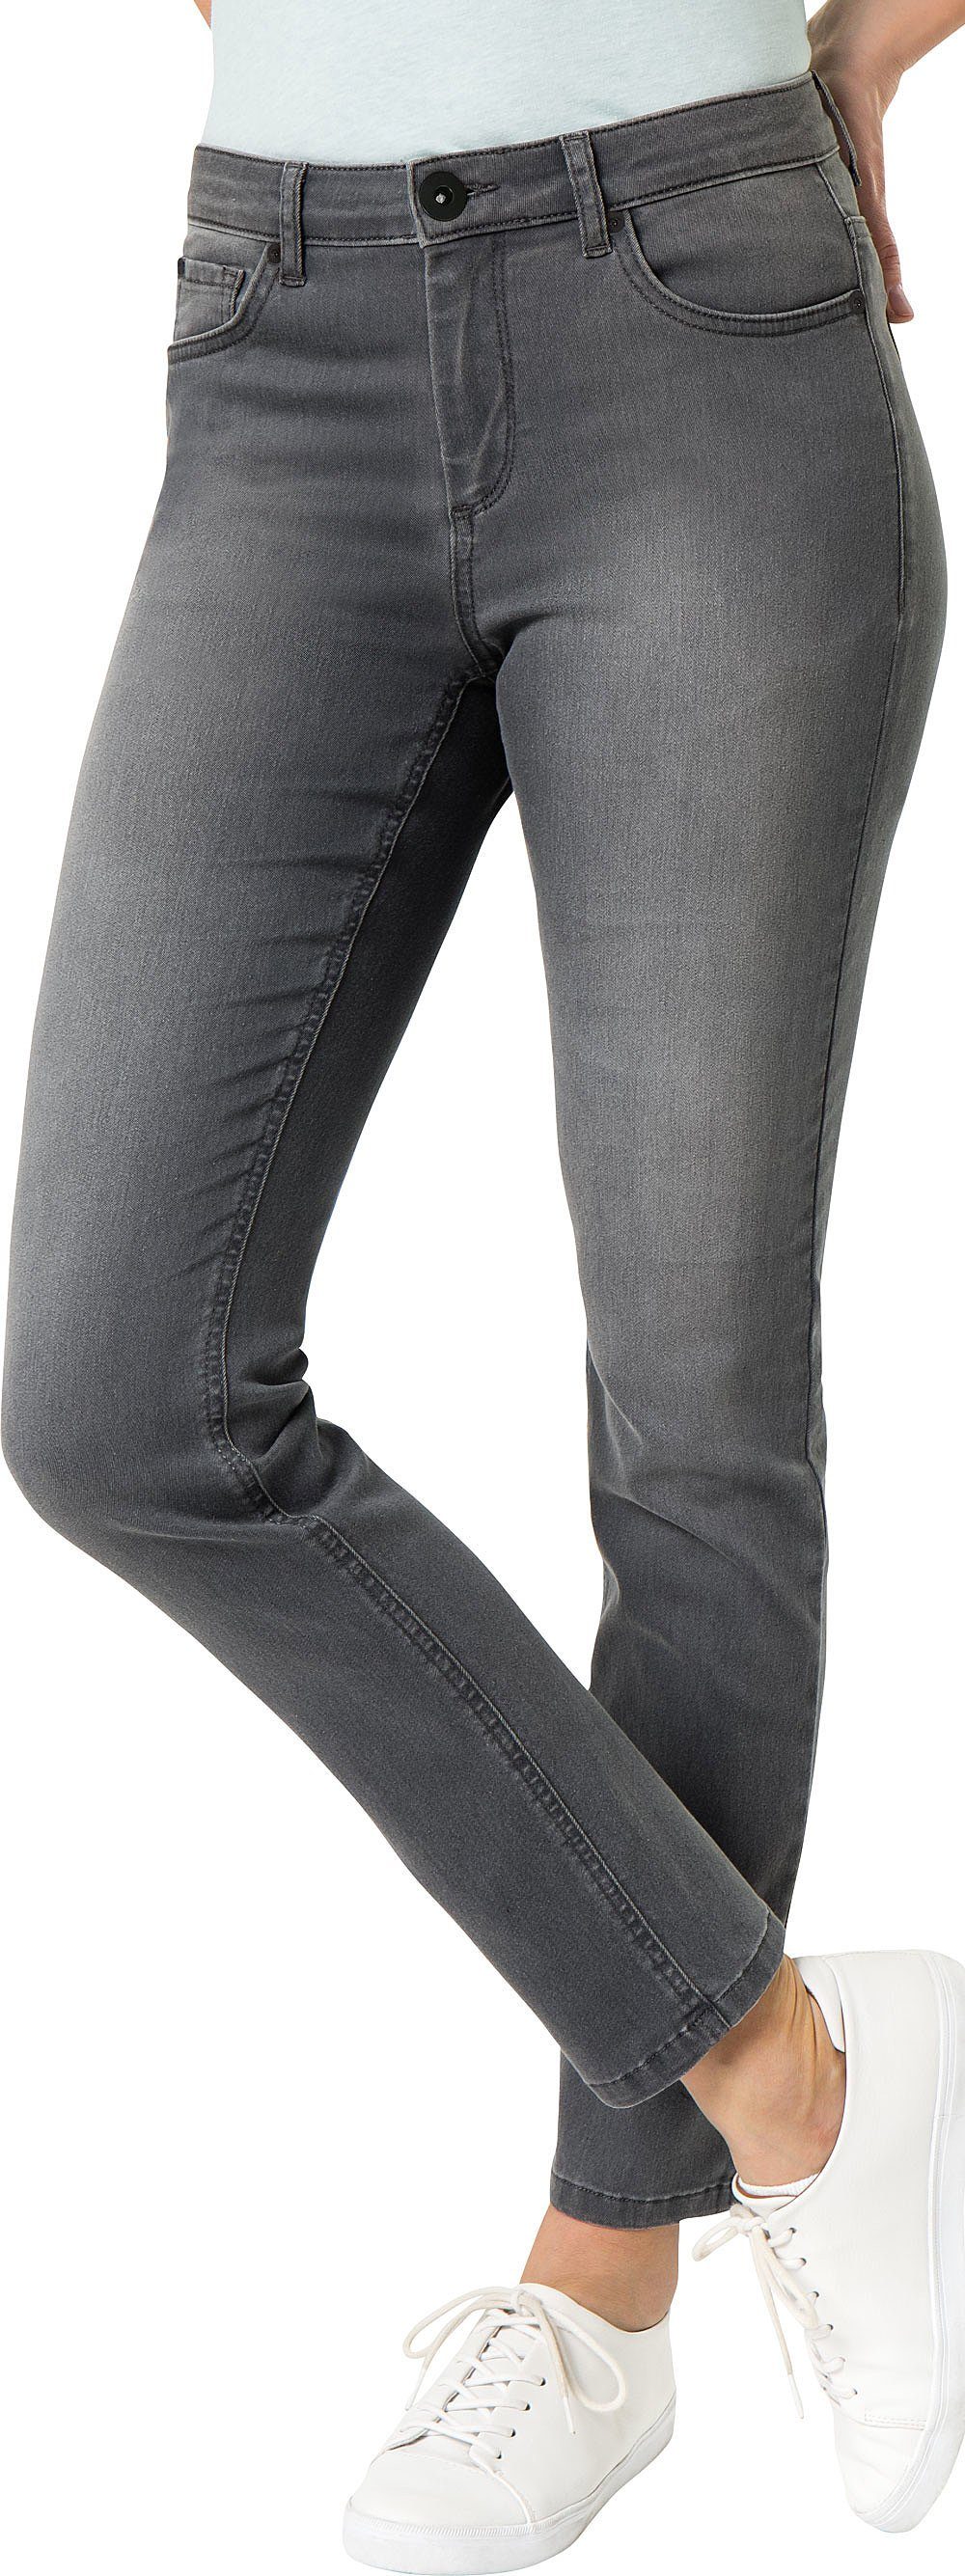 Emilia Parker ultrabequeme Jeans mit Stretch-Hose knackigem Sitz grau